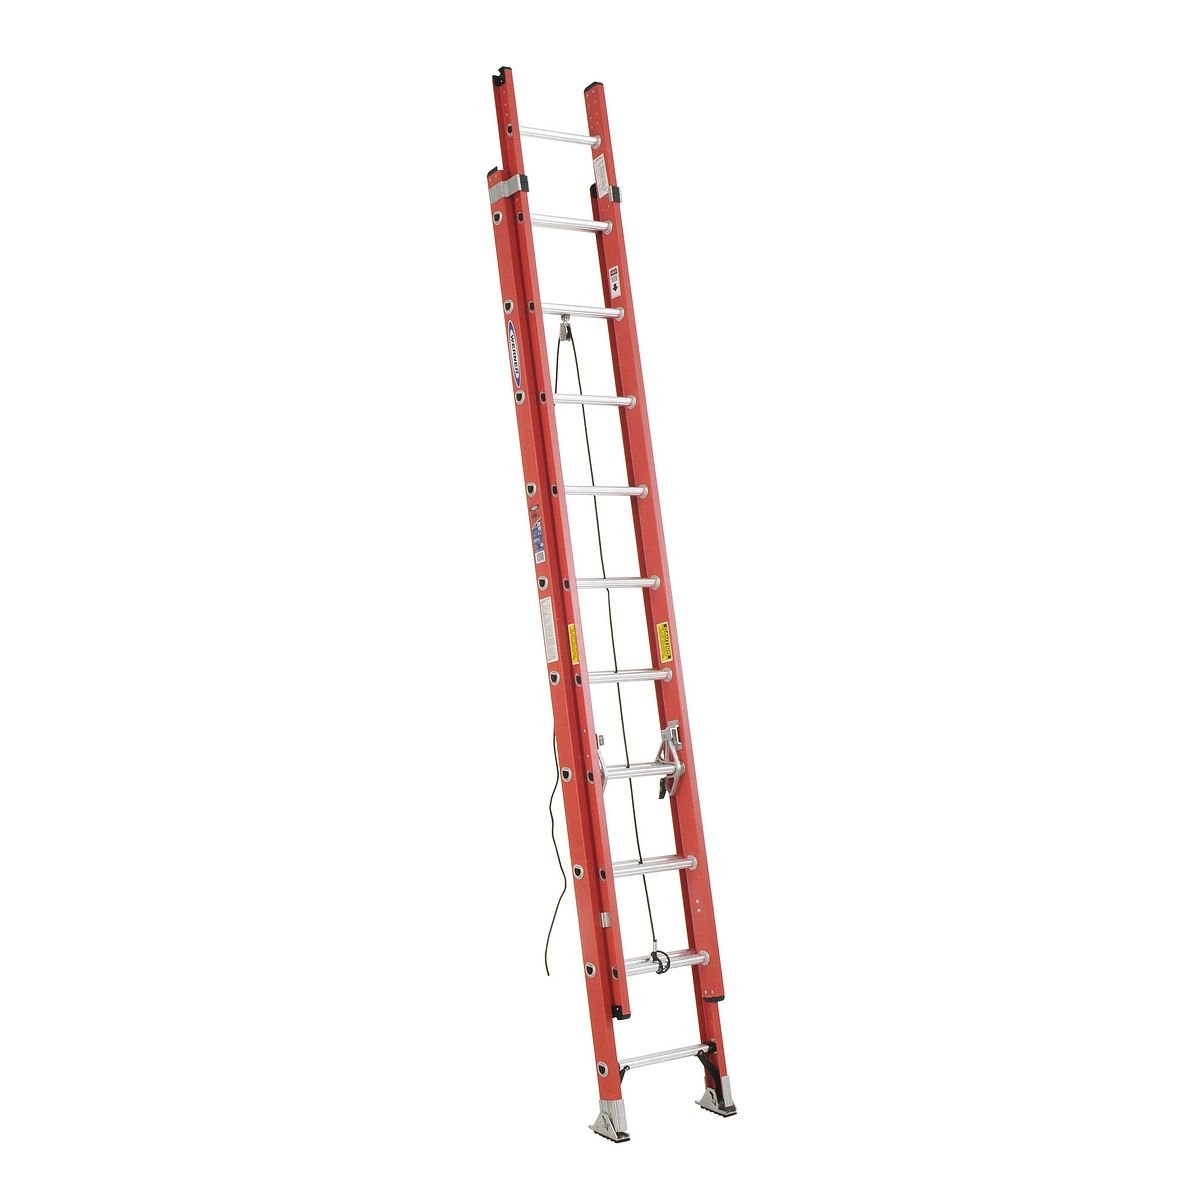 Distributor of Werner D6220-2 Flat D-Rung Extension Ladder in UAE